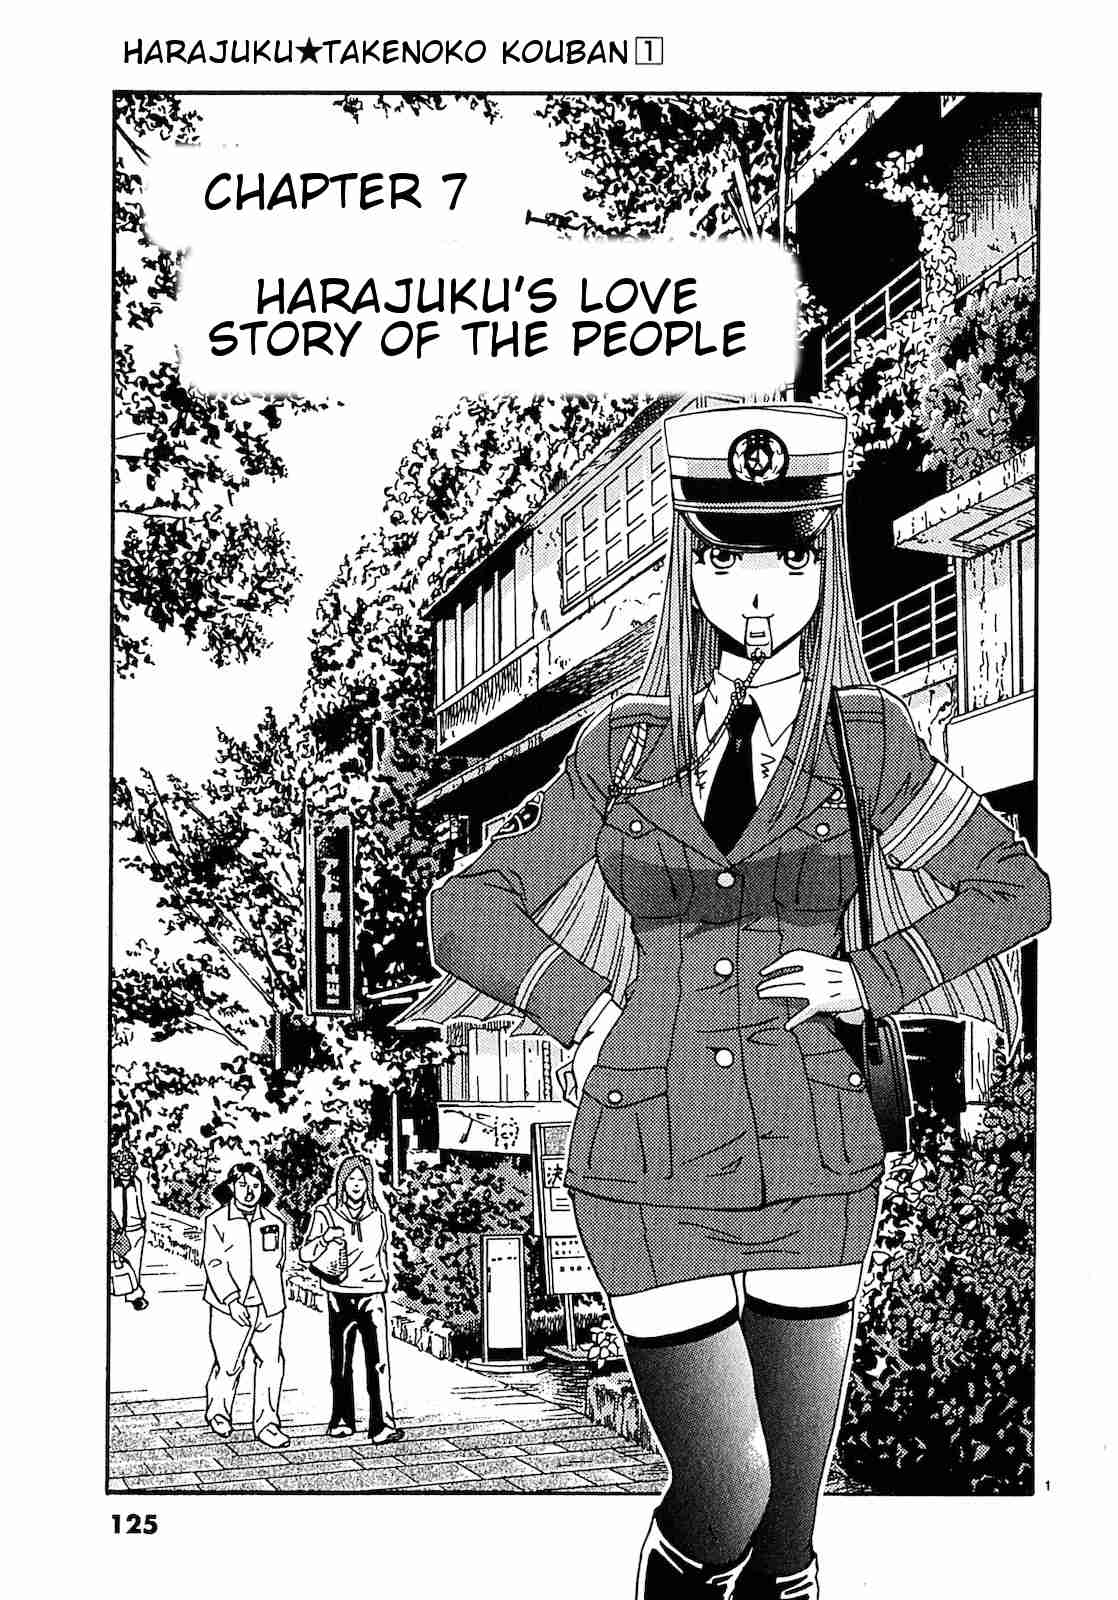 Harajuku Takenoko Kouban Vol. 1 Ch. 7 Harajuku's love story of the people